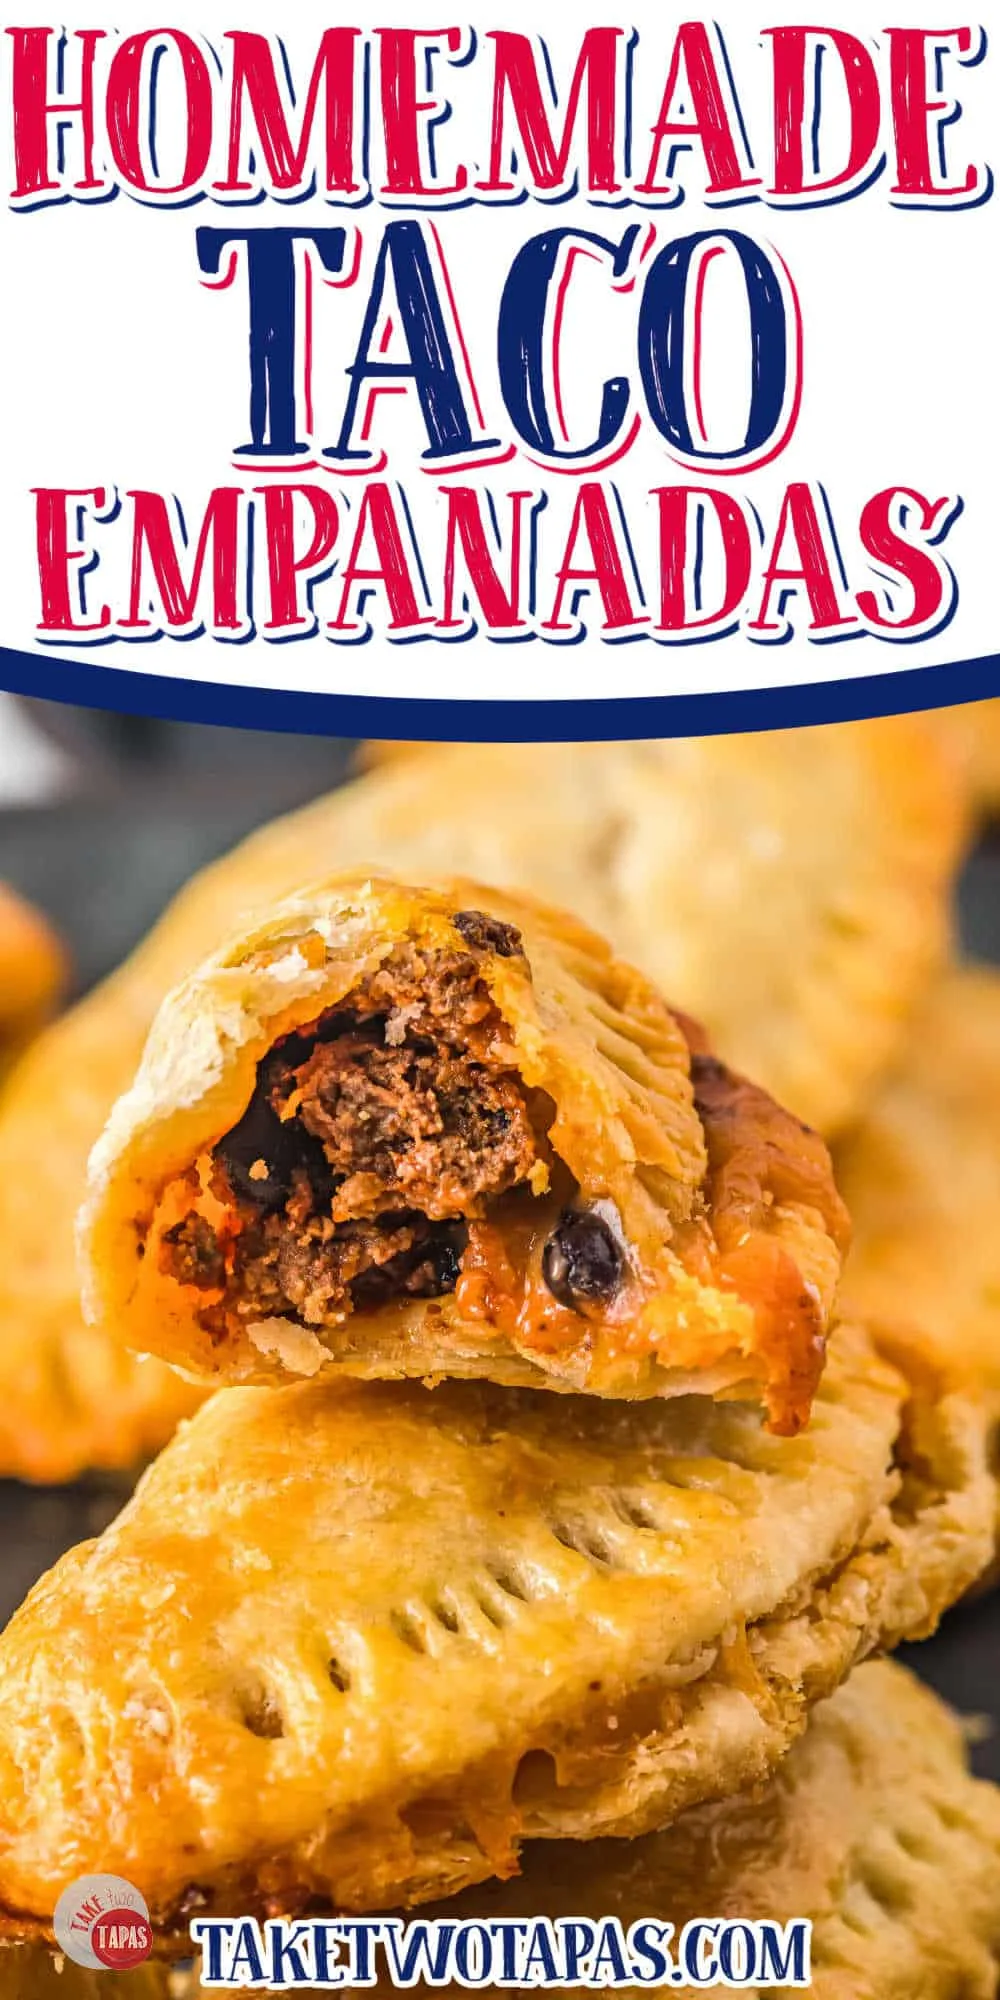 Stack of empanadas with text "homemade taco empanadas" in a text box on top.